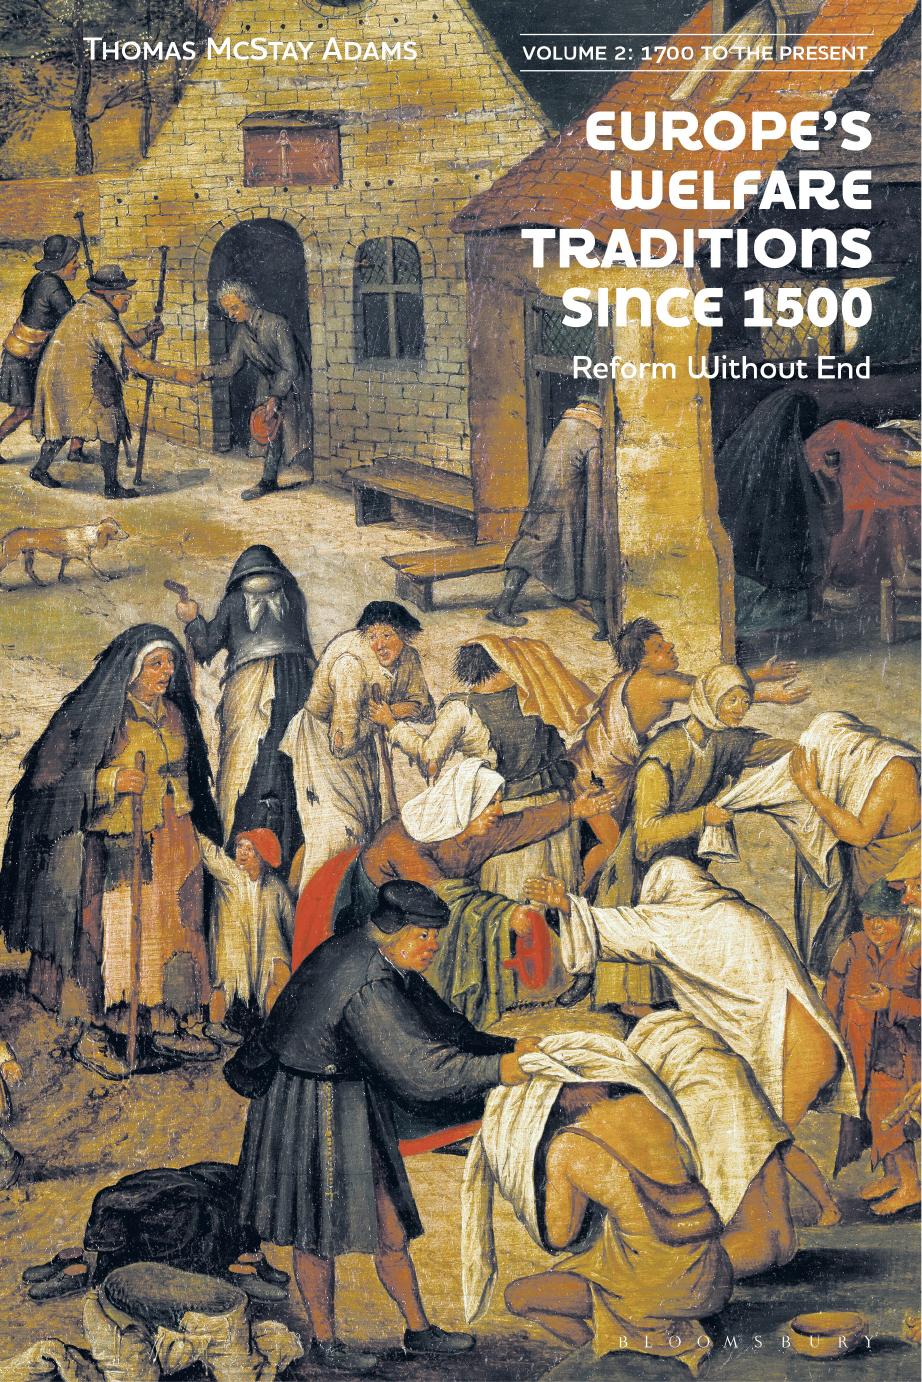 Europeâs Welfare Traditions Since 1500, Volume 2: 1700-2000 by Thomas McStay Adams